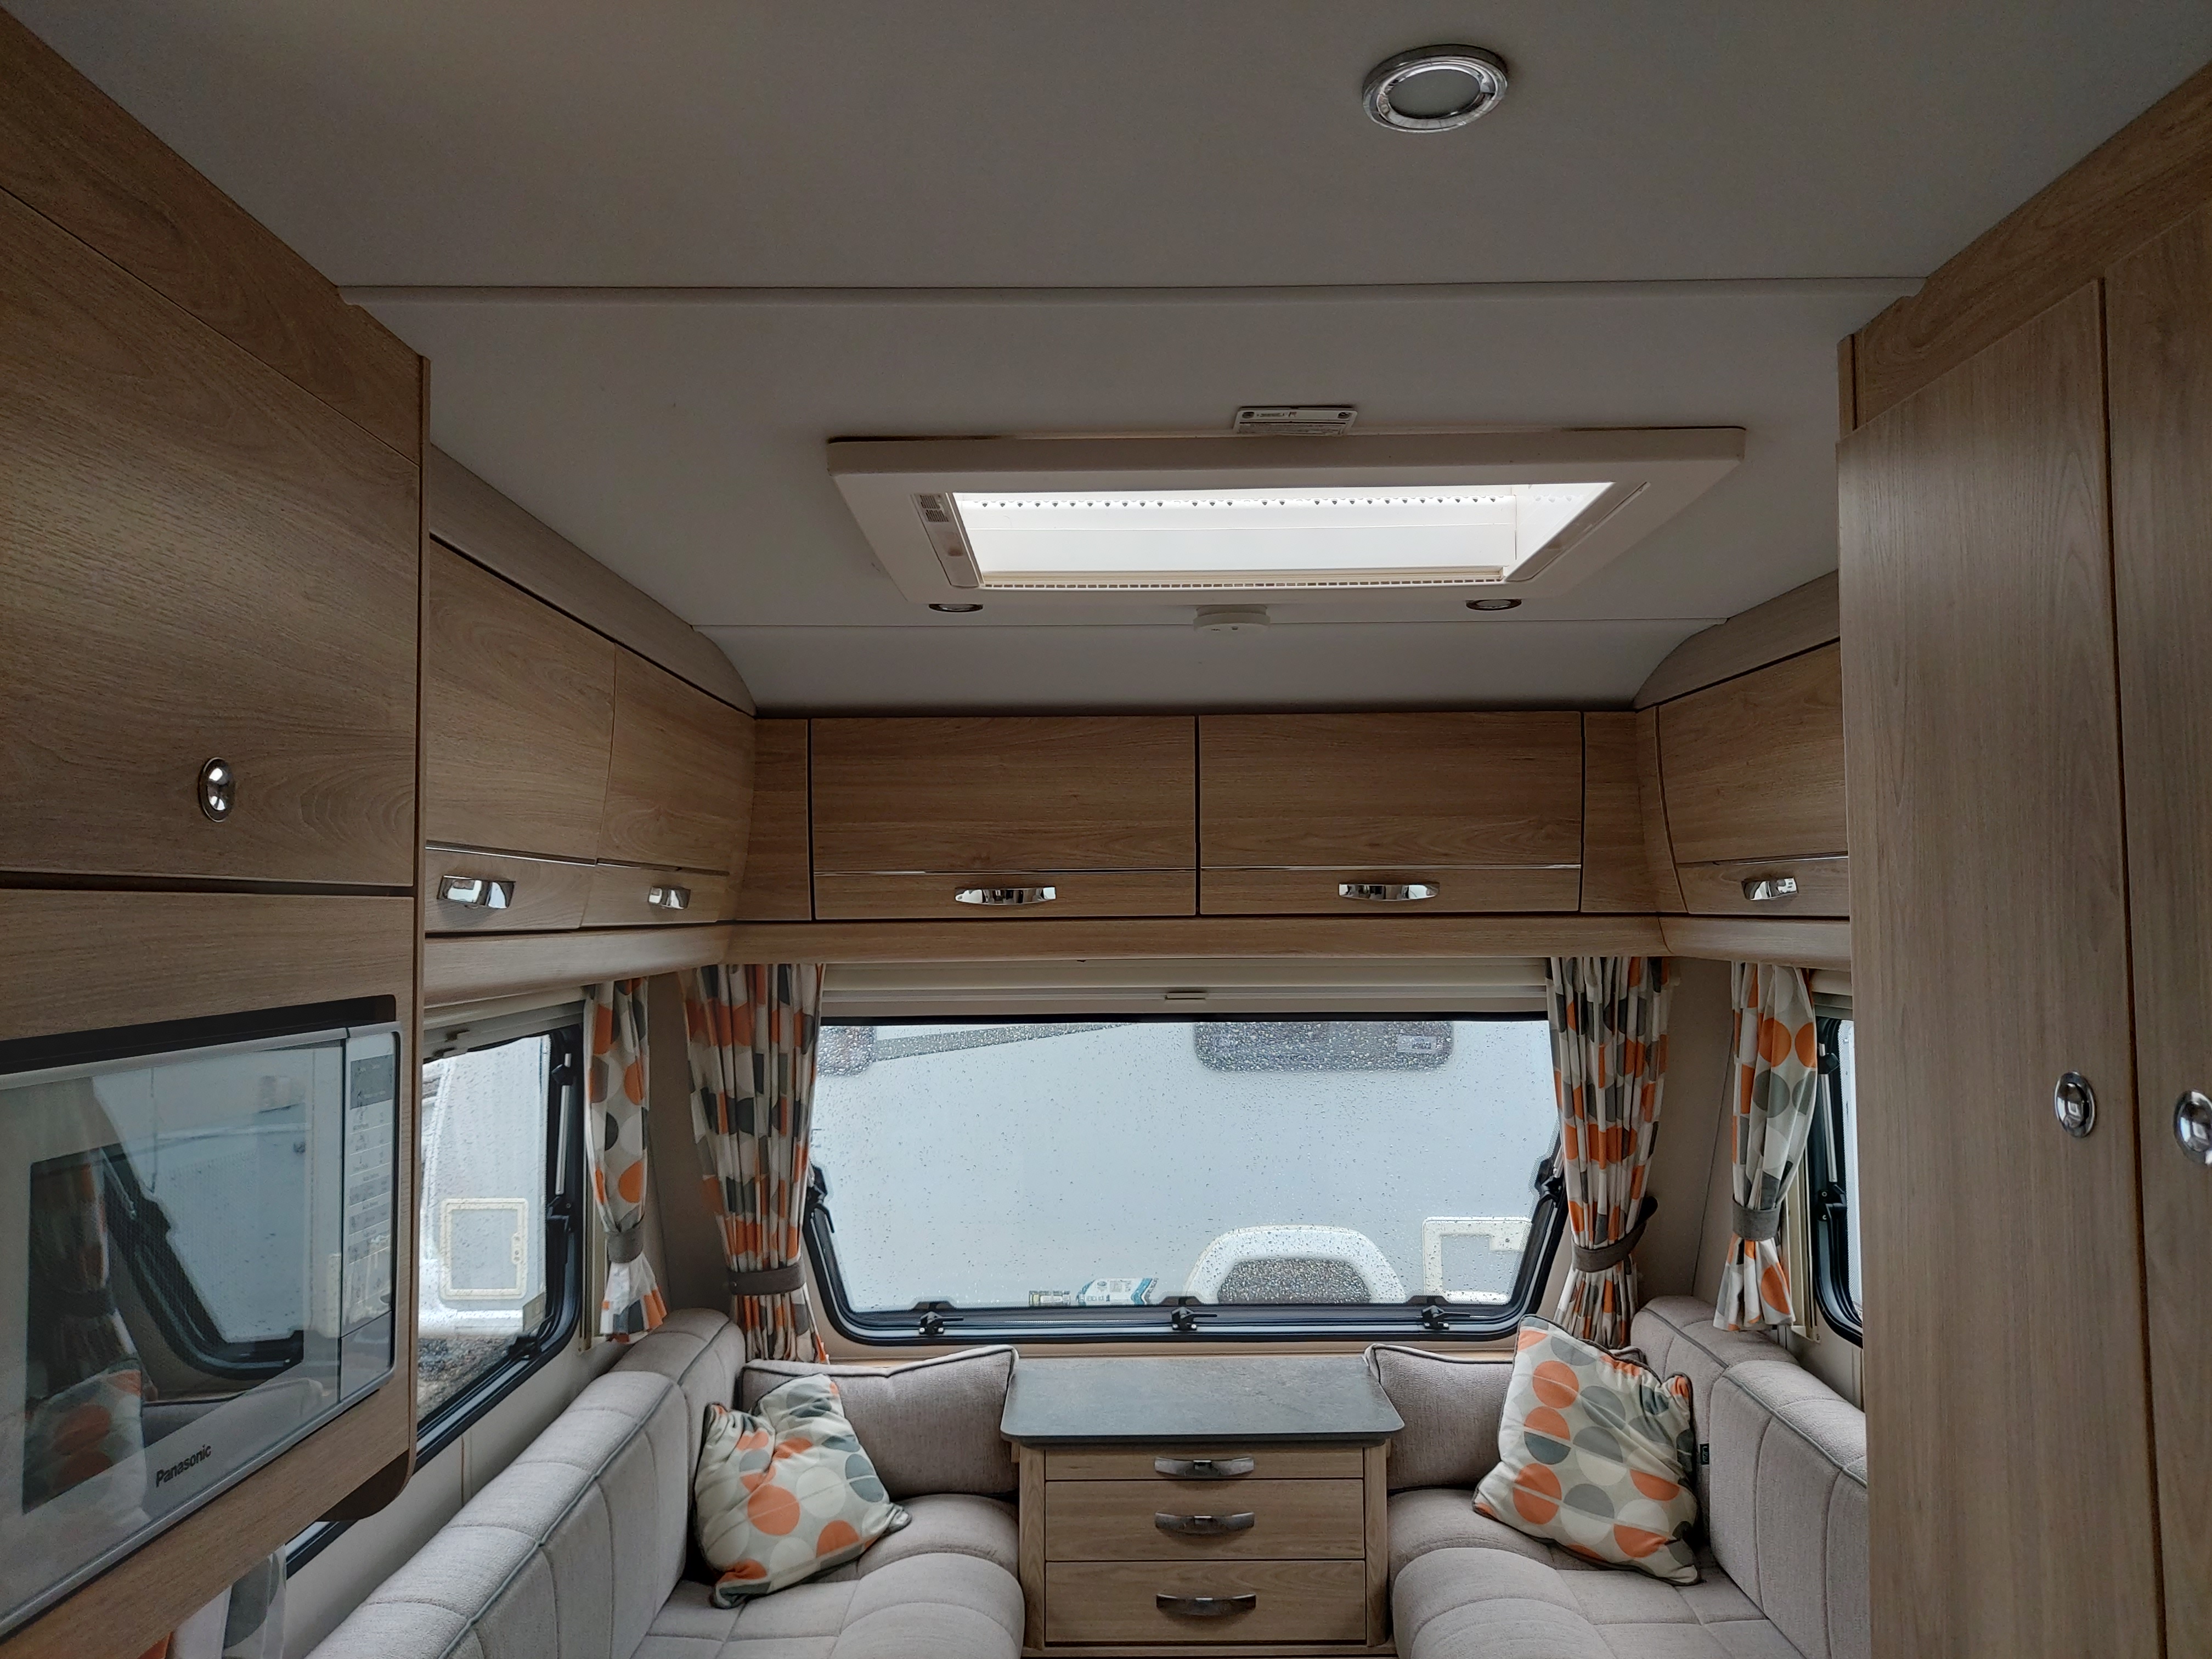 2018 Elddis Xplore 422 SOLID 2 Berth End Kitchen lightweight Caravan, Solar